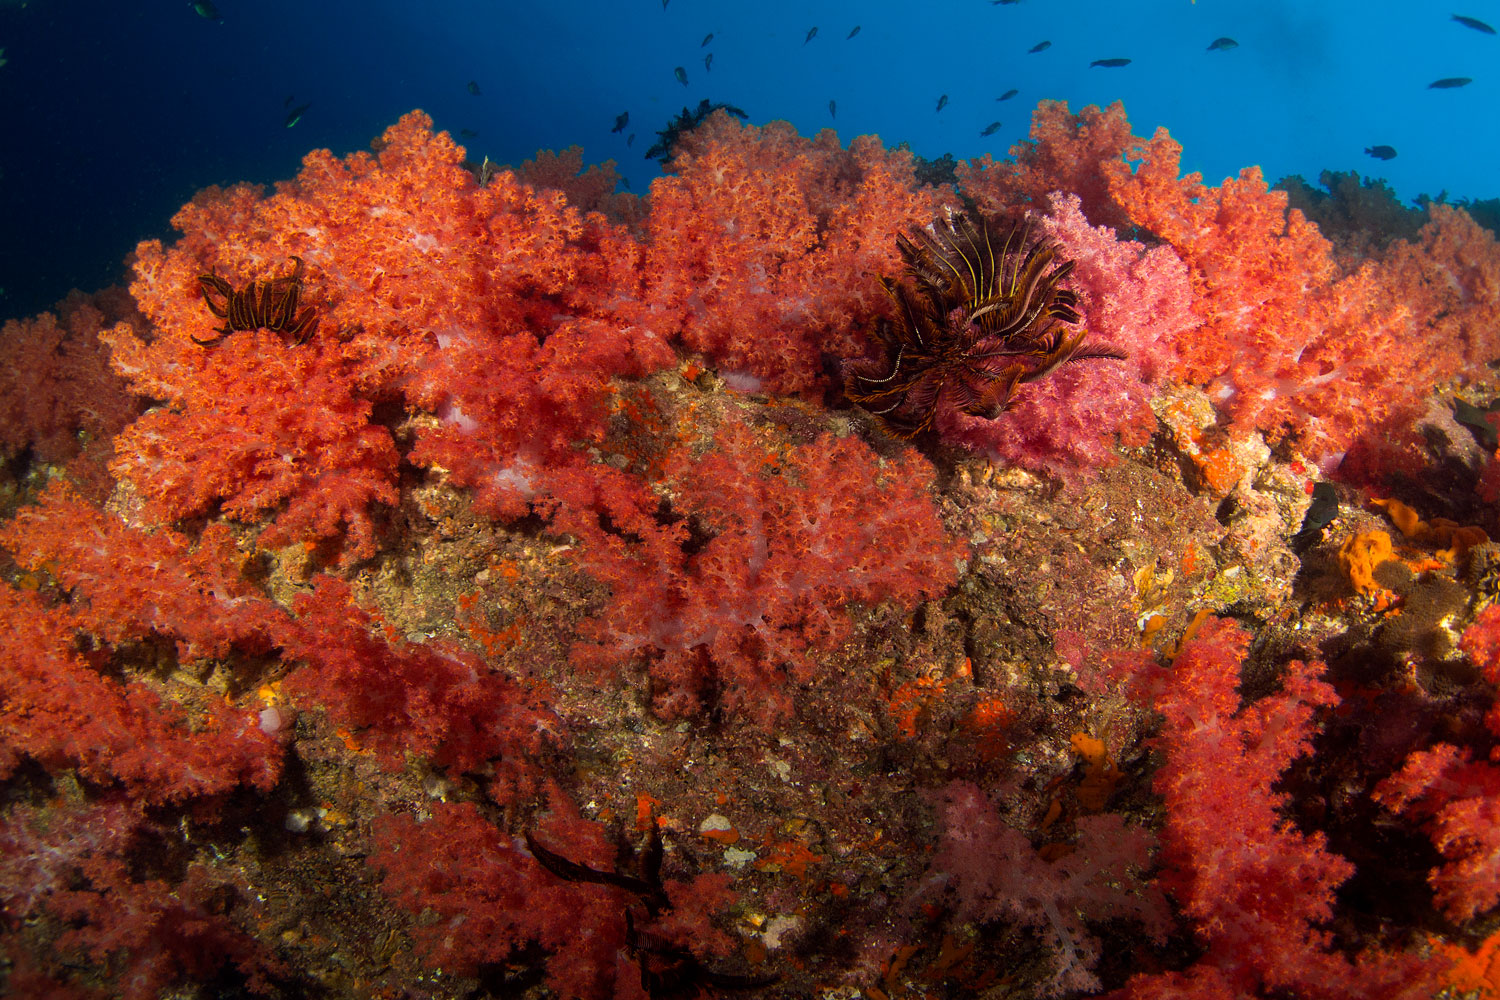 Hin Daengred rock coral reef